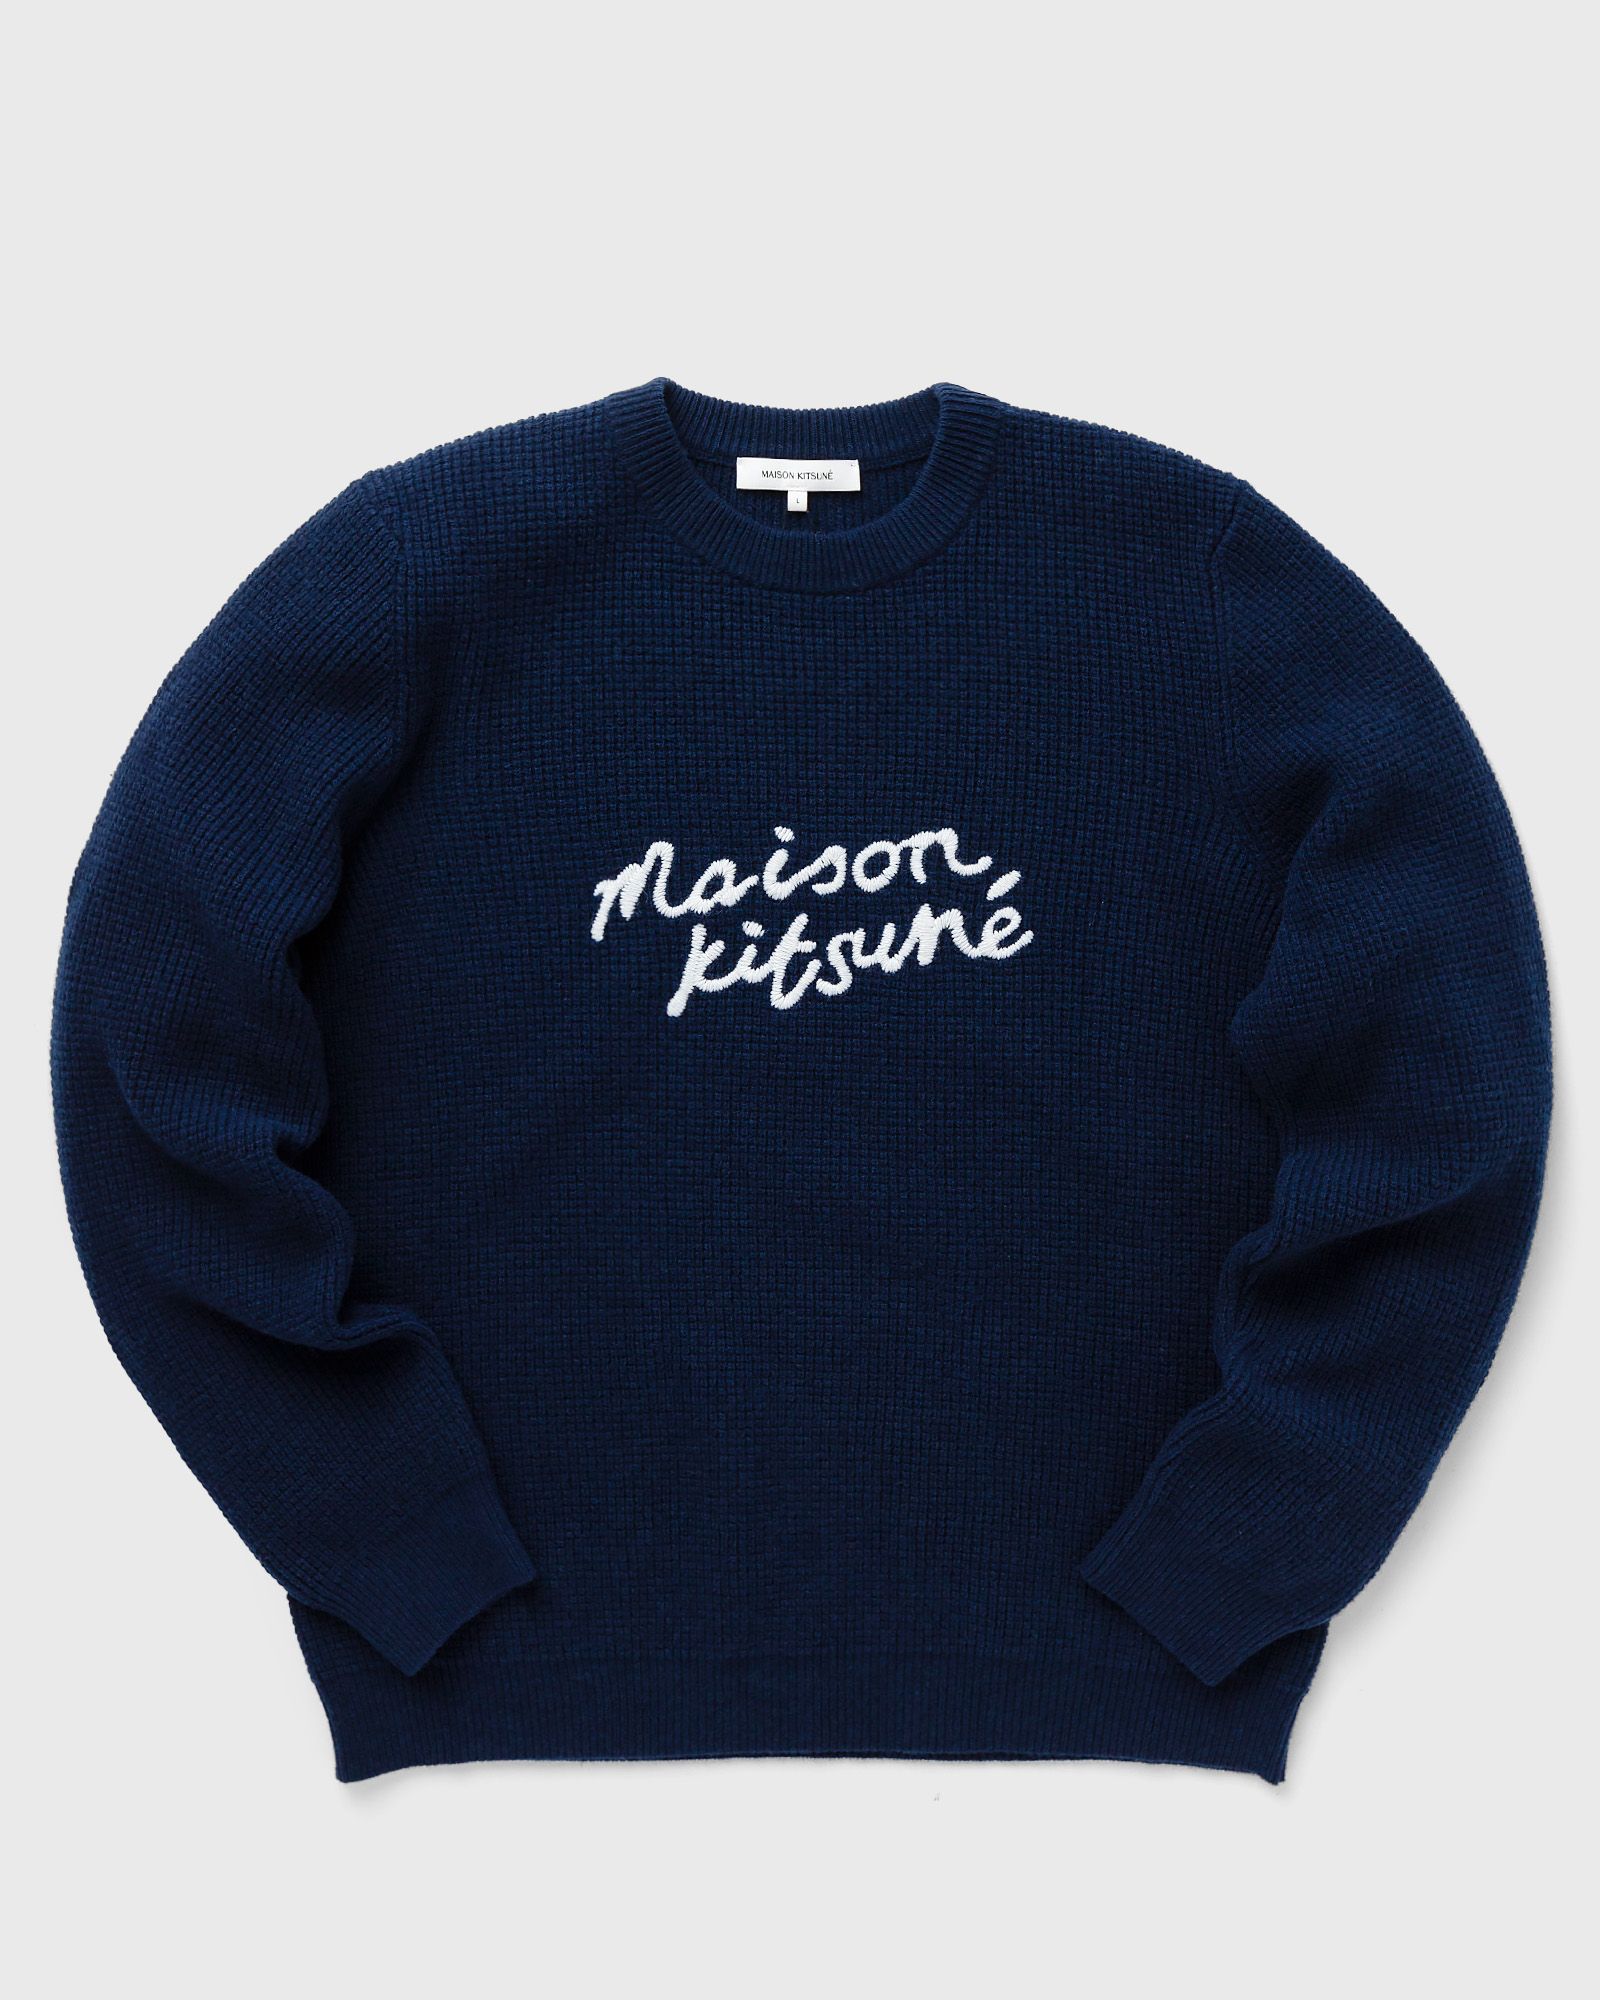 Maison Kitsune - handwriting comfort jumper men pullovers blue in größe:l